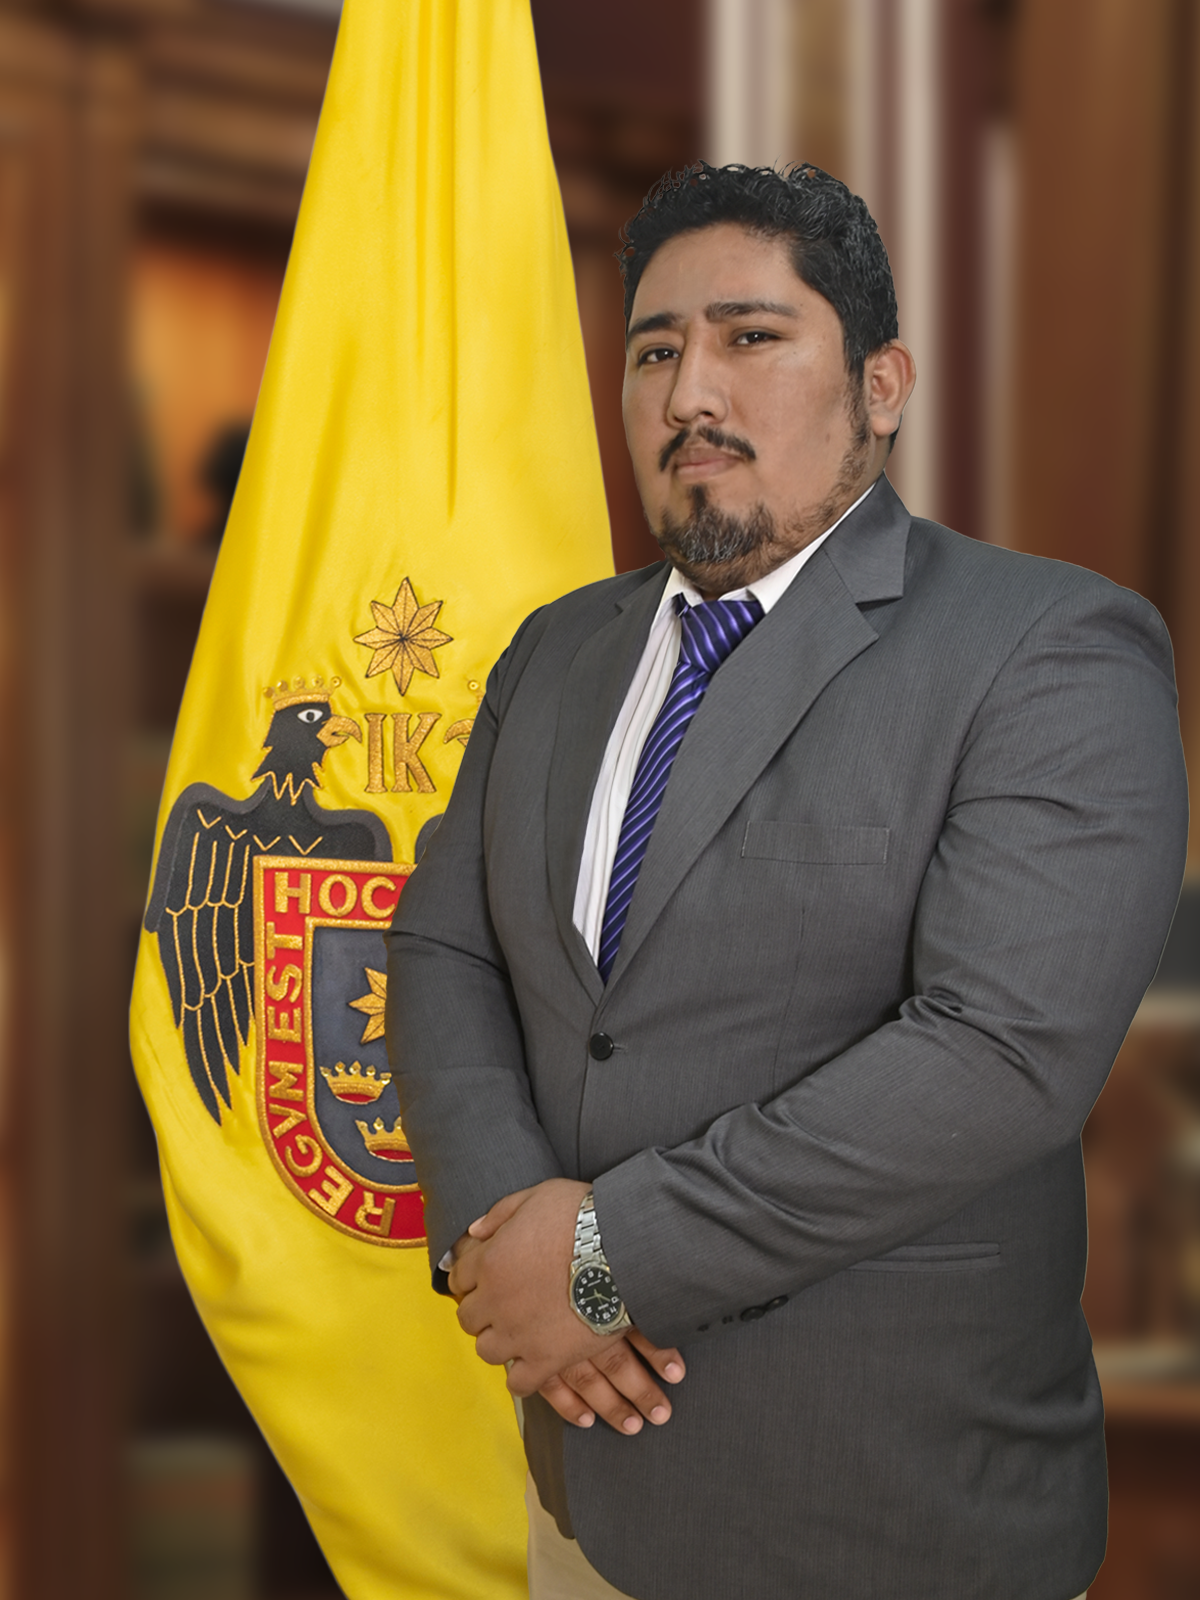 Michael Esteban Alata Romero